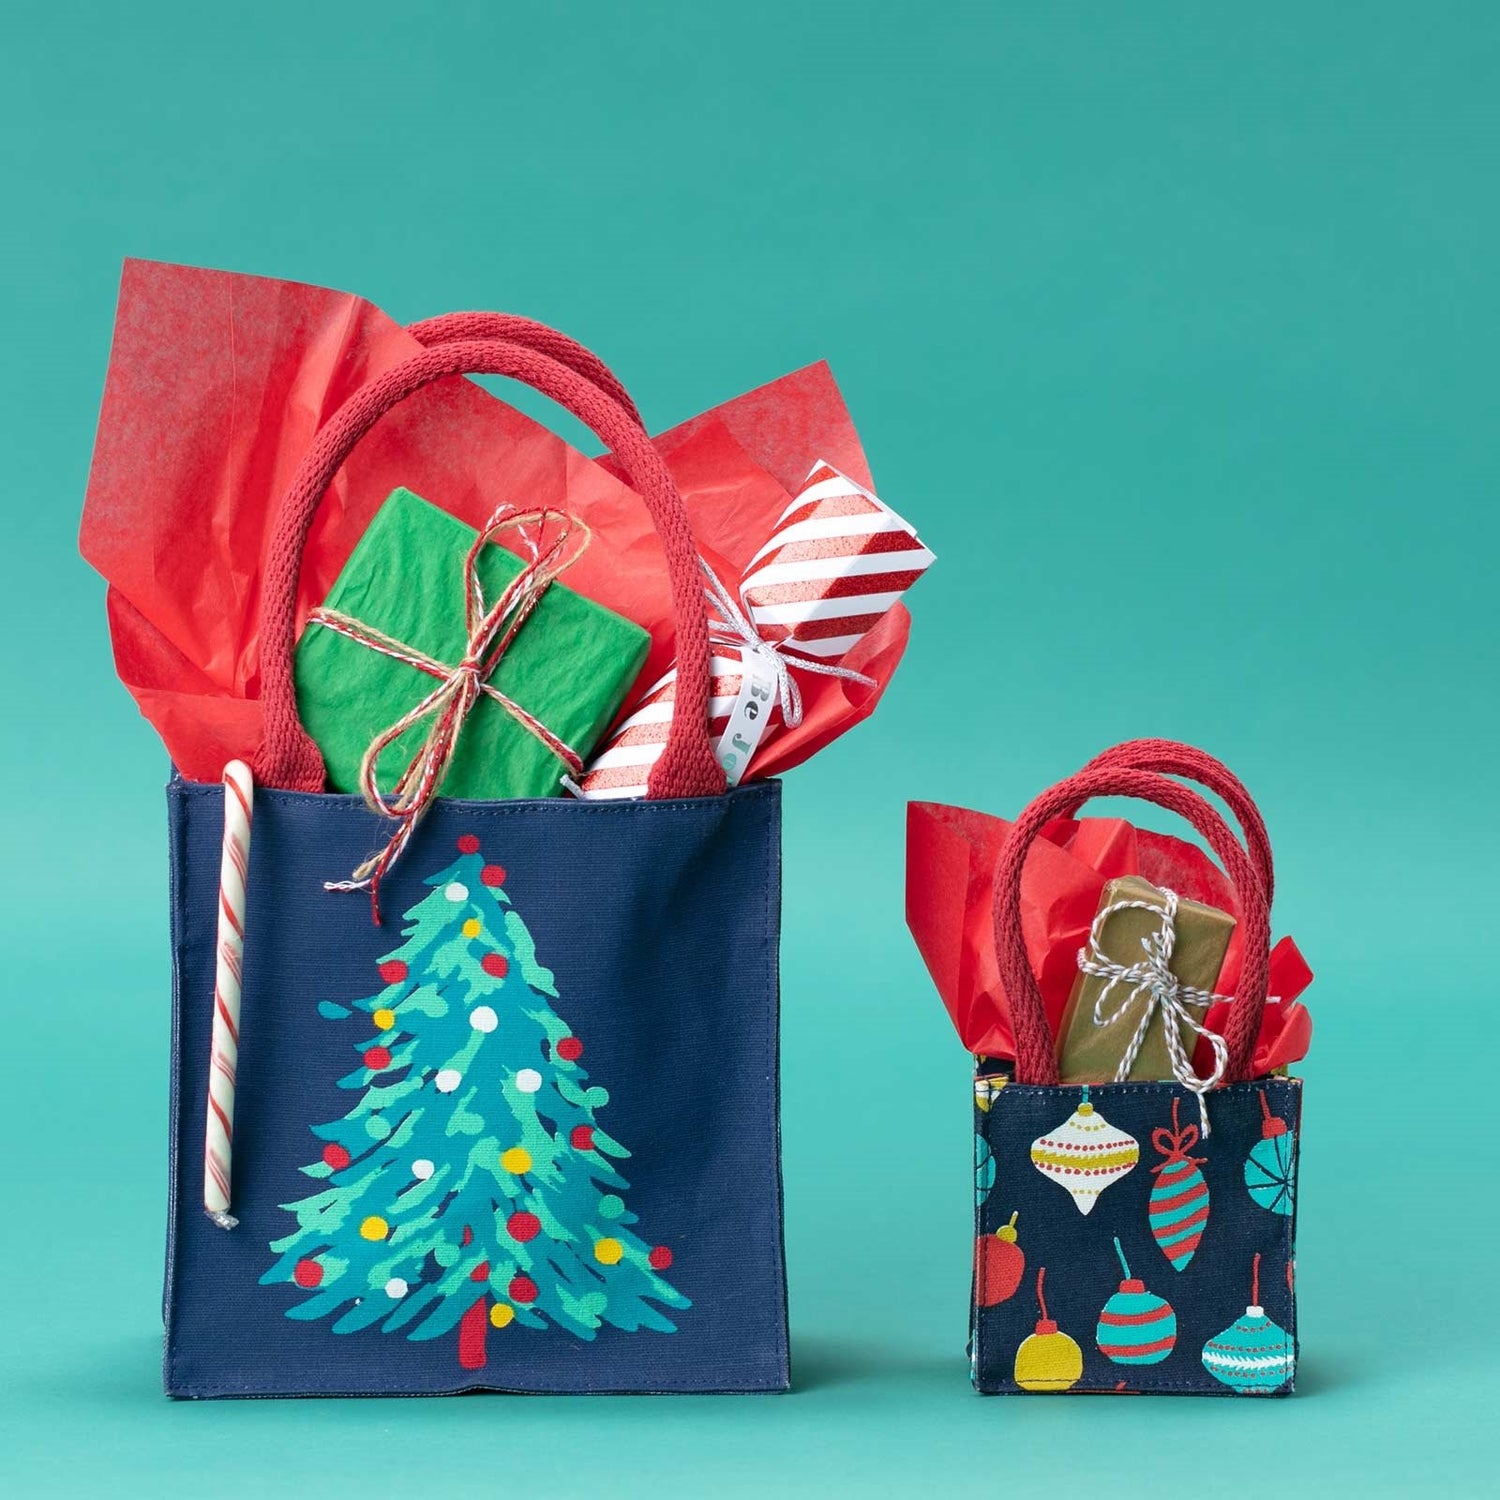 rockflowerpaper Abstract Christmas Tree Round Art Coasters - Set of 4